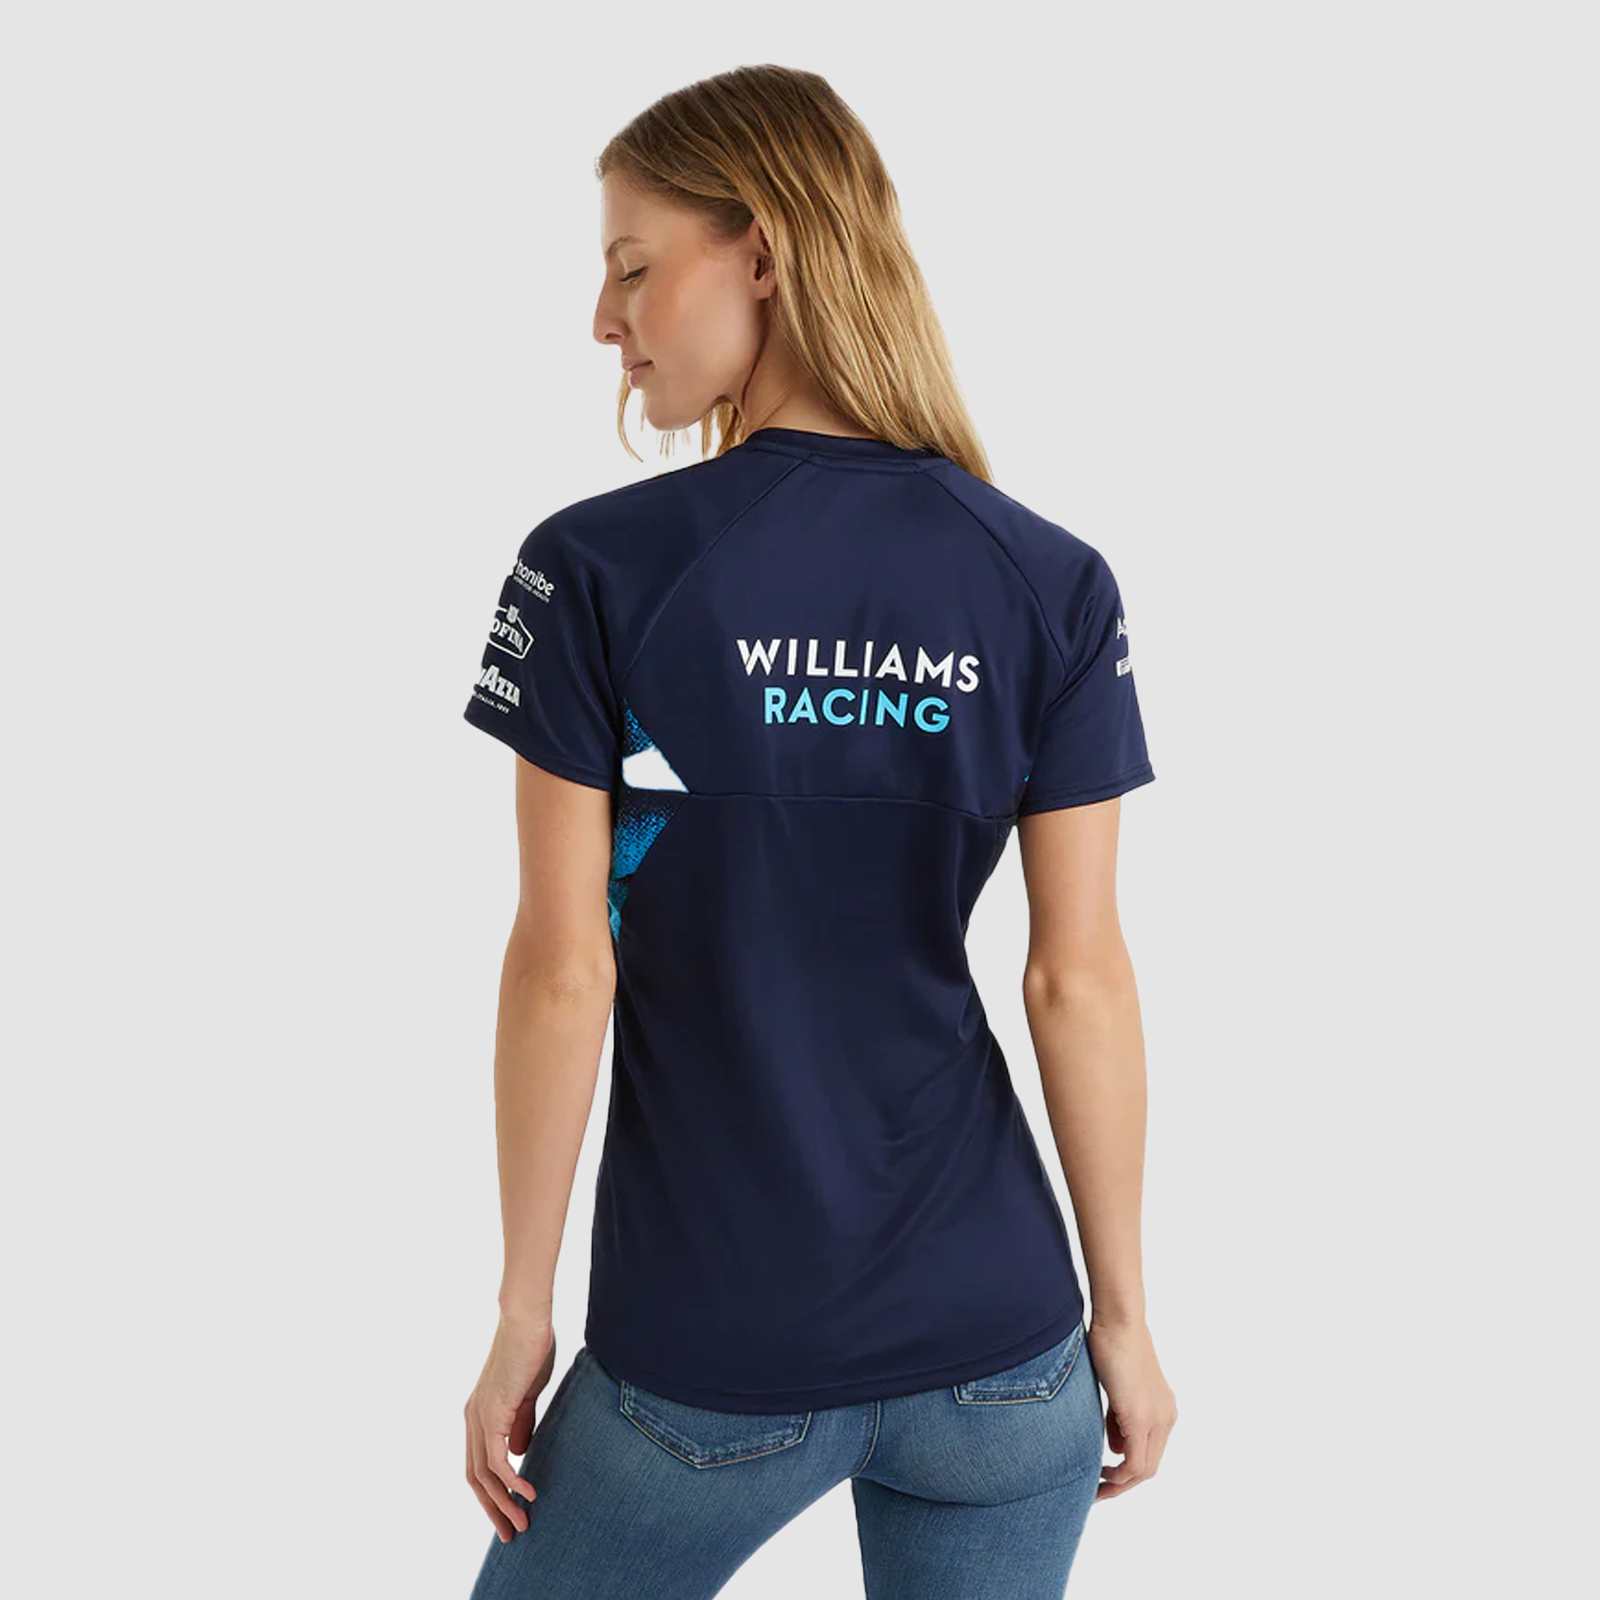 williams racing jersey